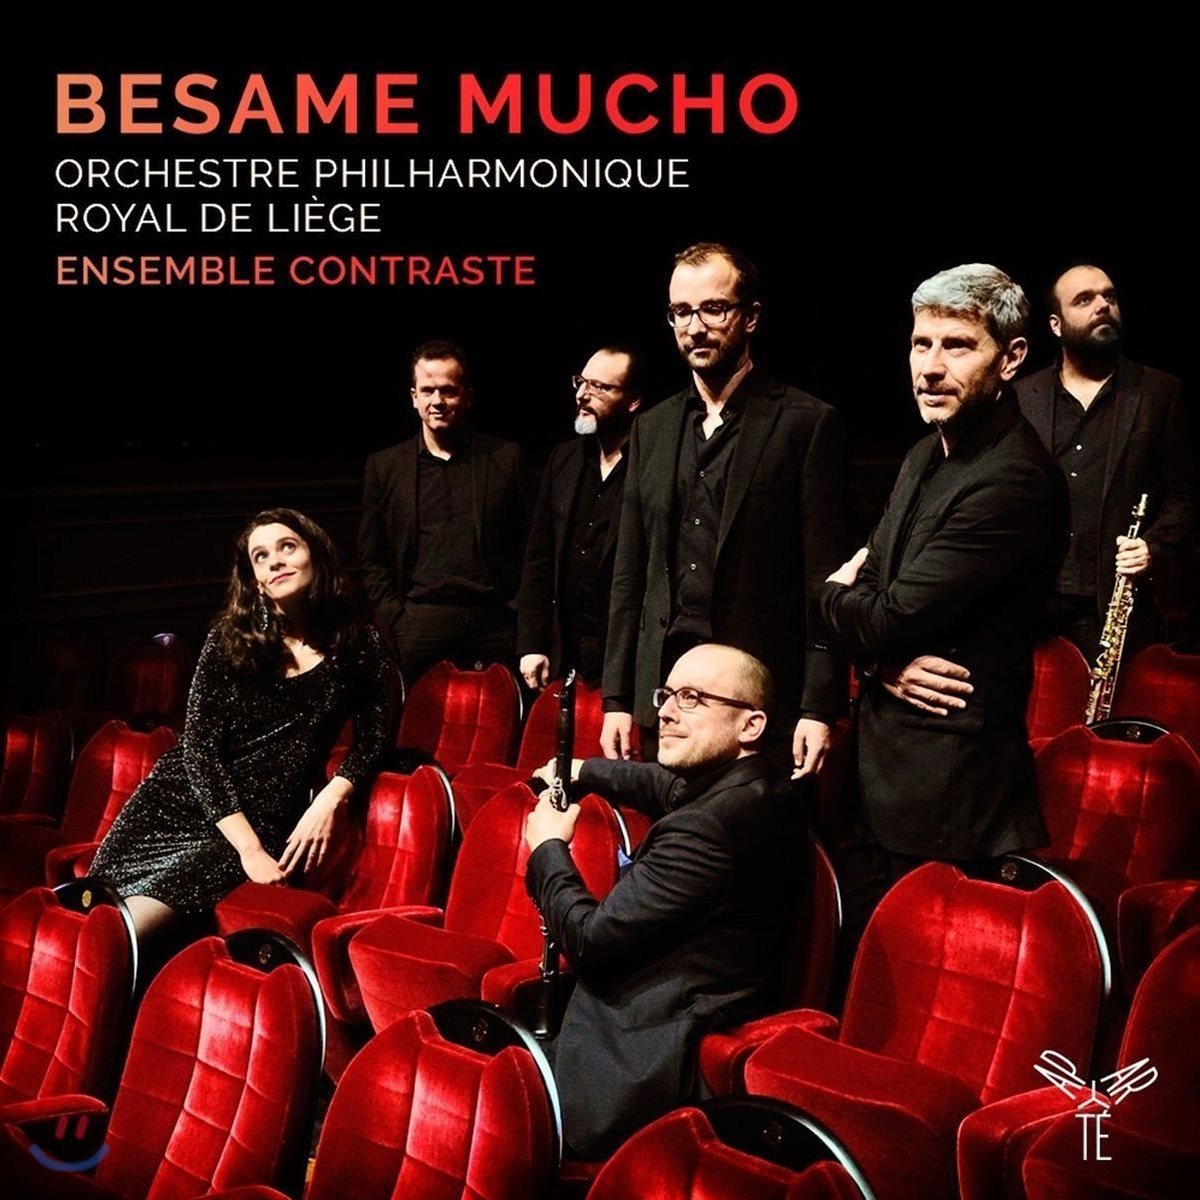 Ensemble Contraste 베사메 무쵸 - 피아졸라 / 가르델: 탱고 음악 (Besame Mucho) 